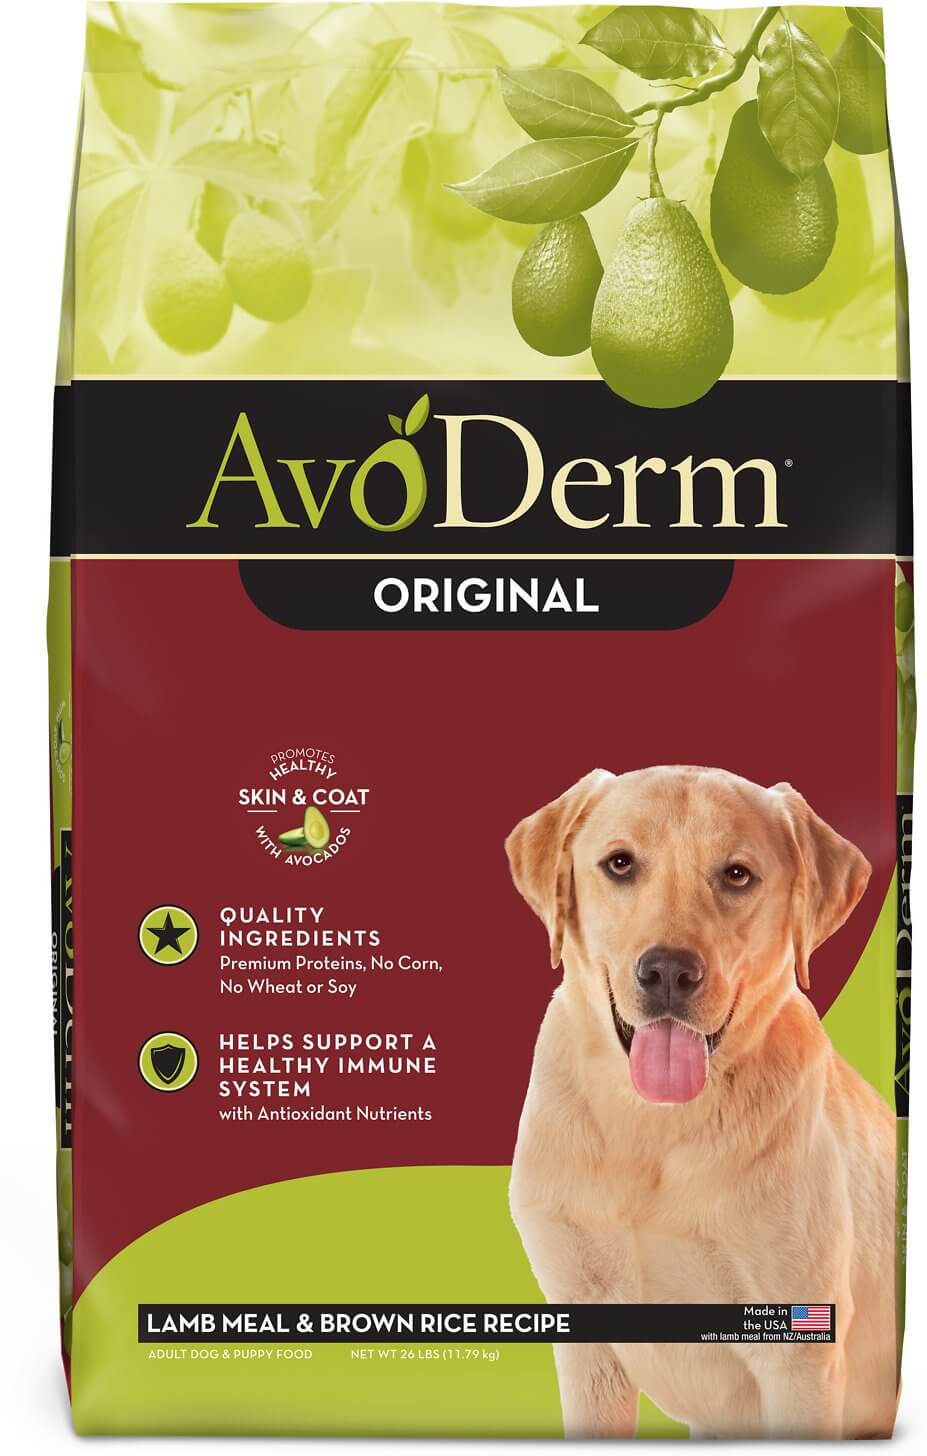 AvoDerm Natural Dog Food Review Rating Recalls